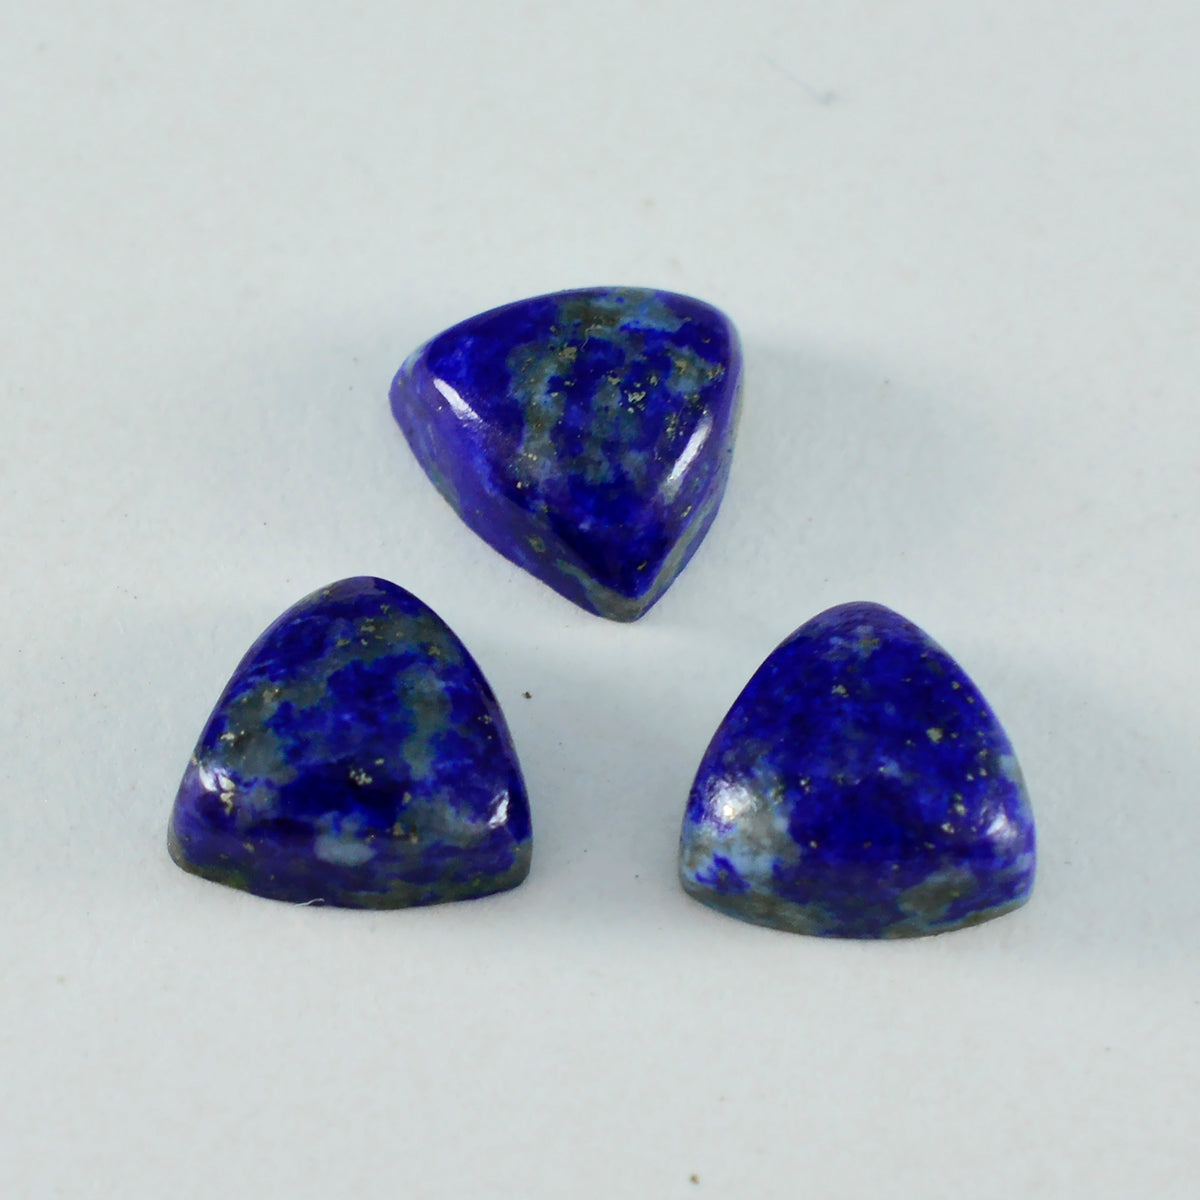 Riyogems 1PC Blue Lapis Lazuli Cabochon 13x13 mm Trillion Shape pretty Quality Loose Gem